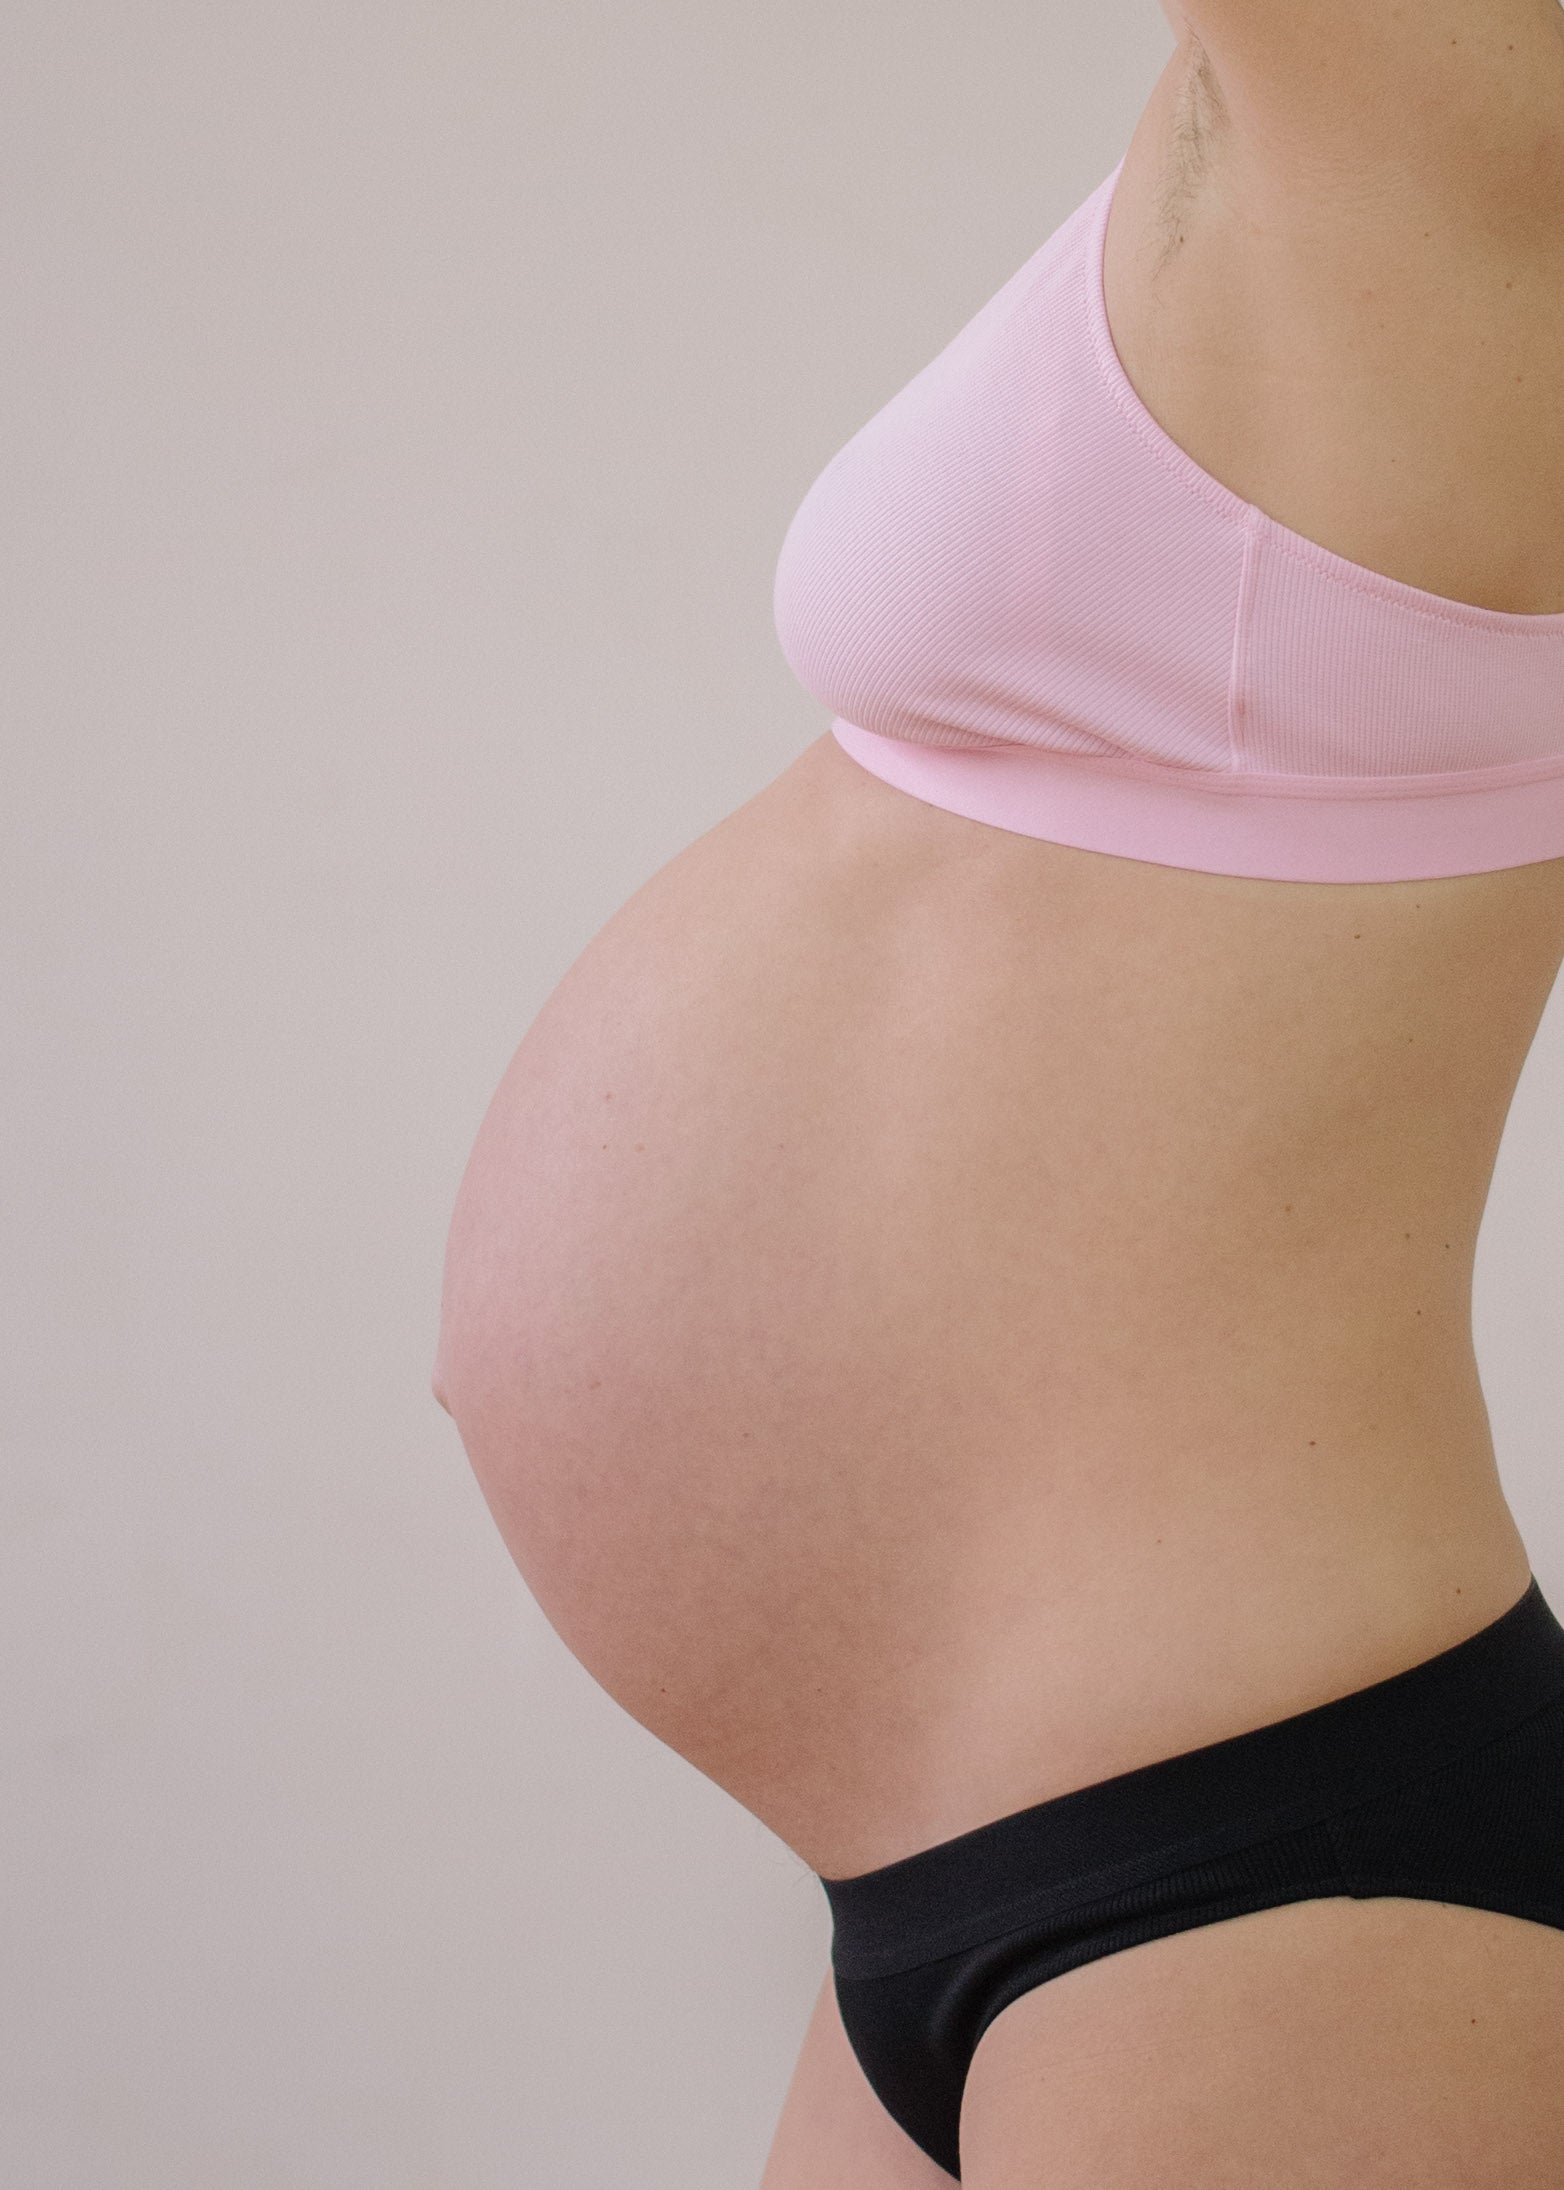 Six Maya Nursing bra, modern maternity, pregnancy, breastfeeding, cotton rib jersey Pink